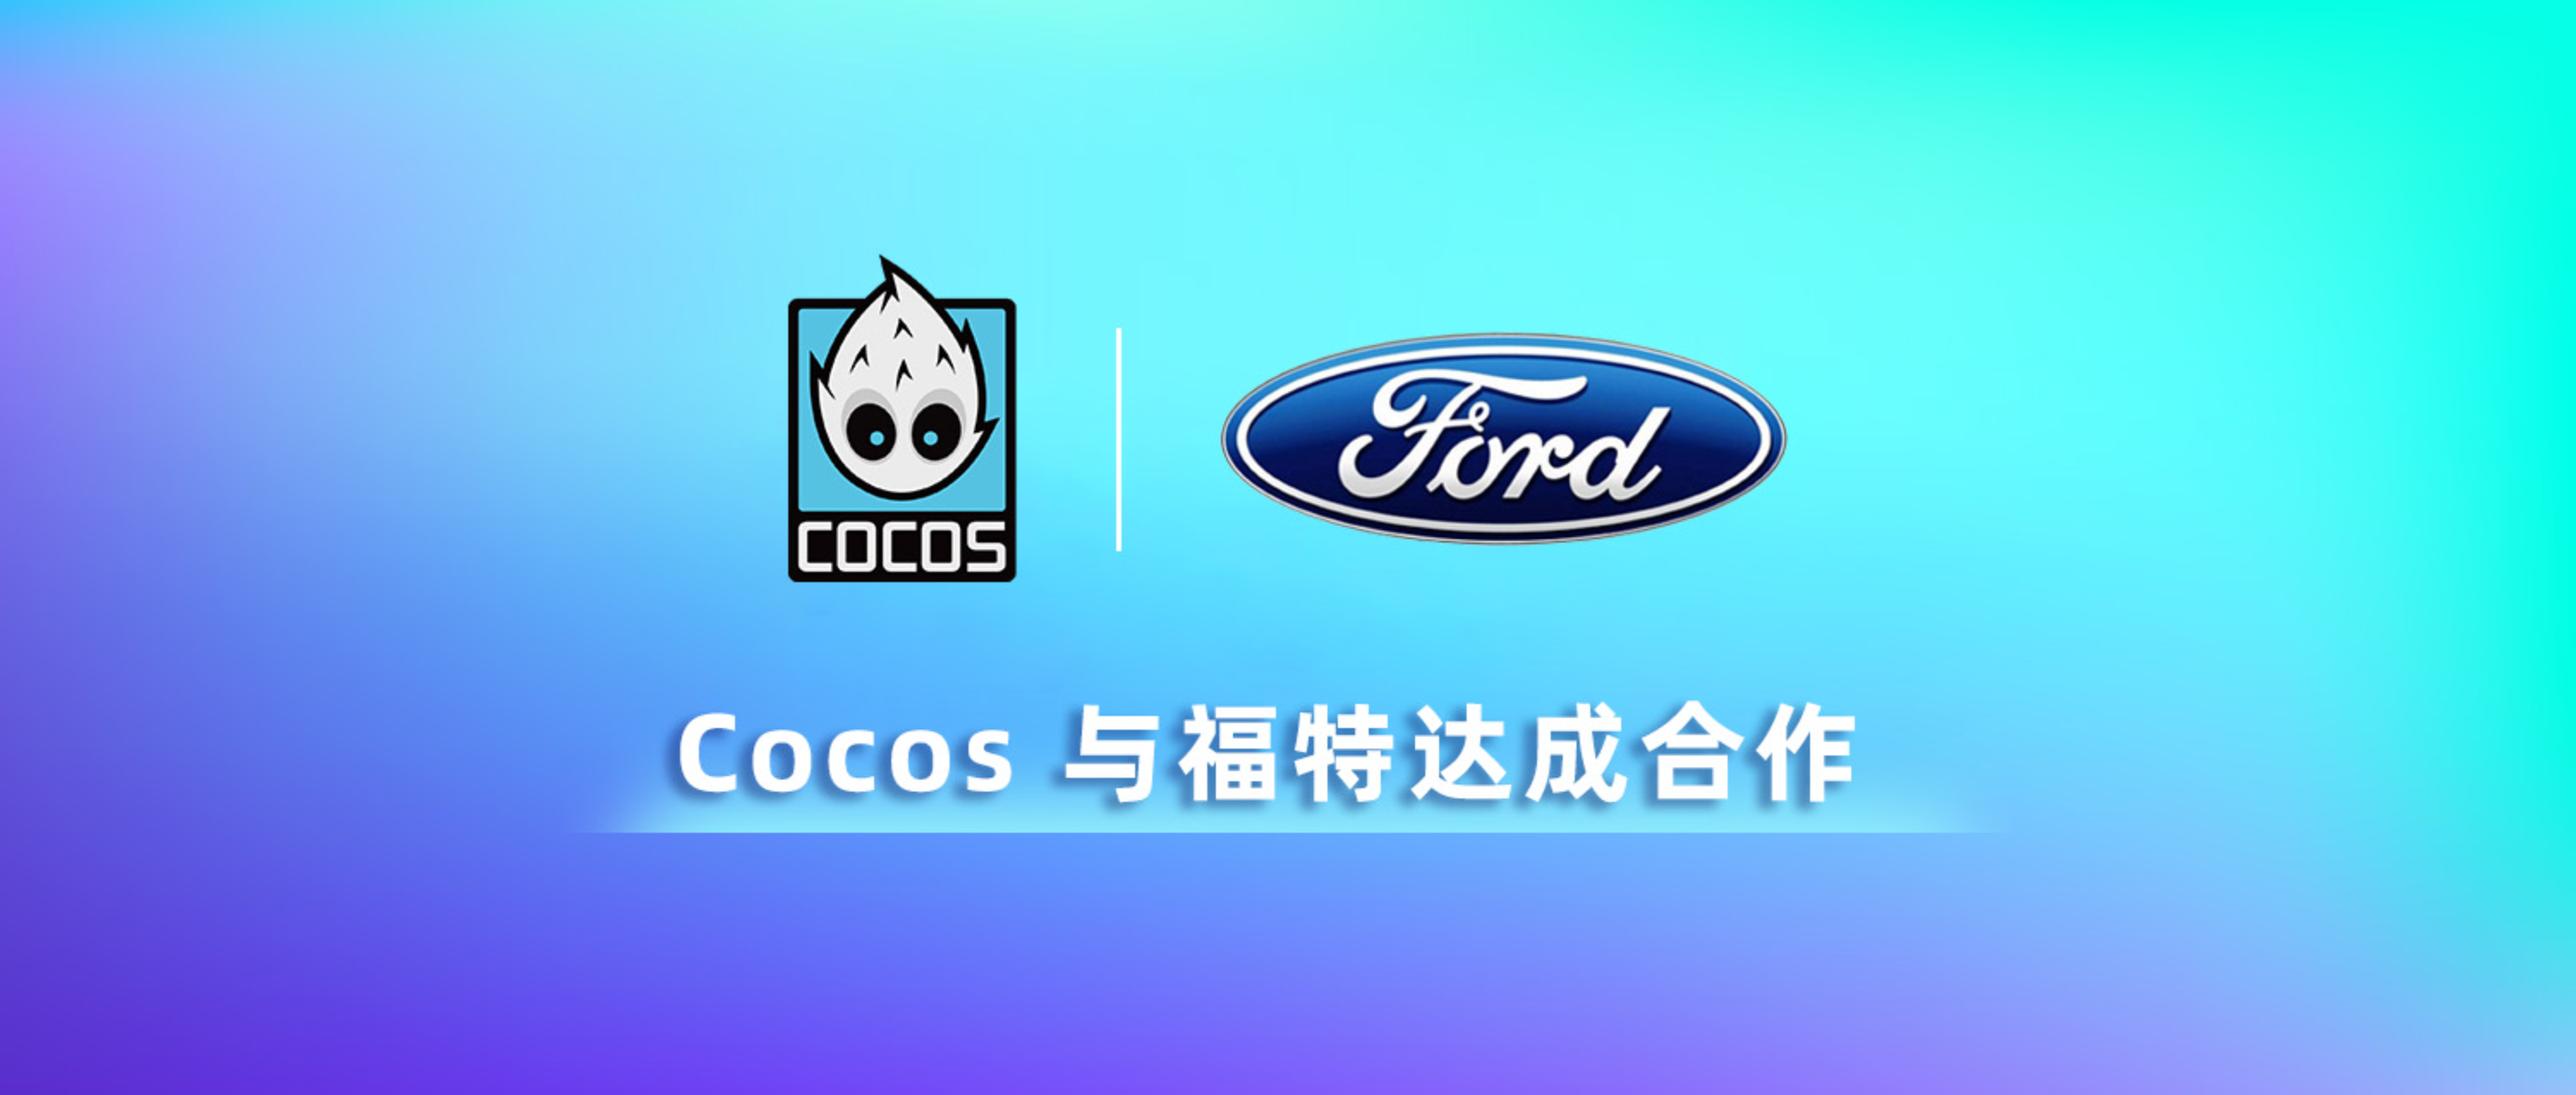 Cocos 与福特达成合作，共同探索智能座舱解决方案